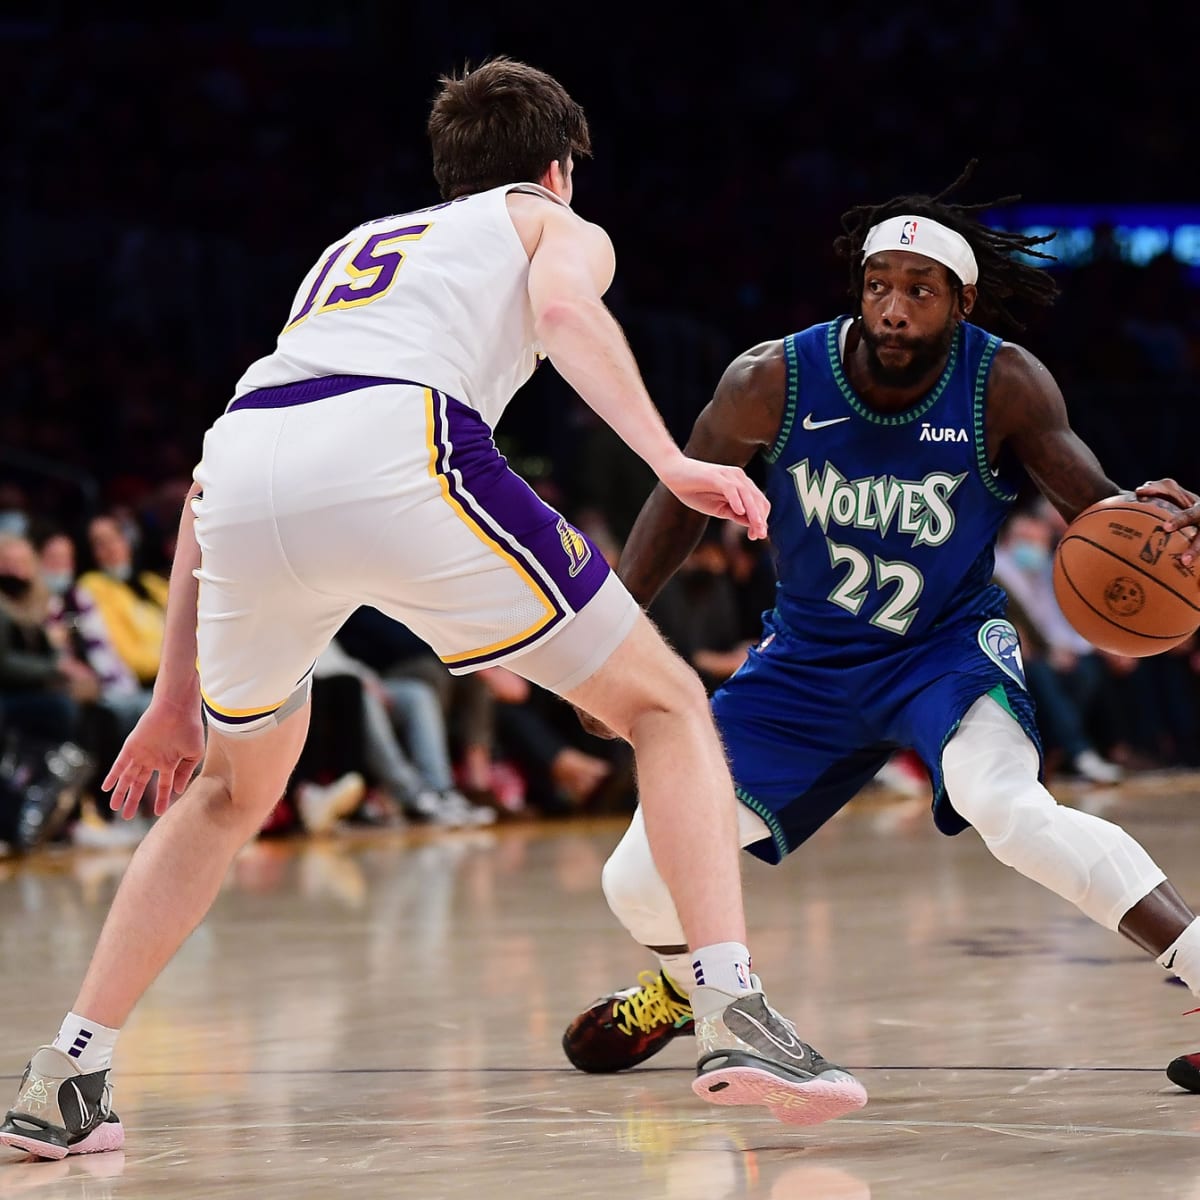 Talen Horton-Tucker on Chicago pride, Lakers trade 'motivation